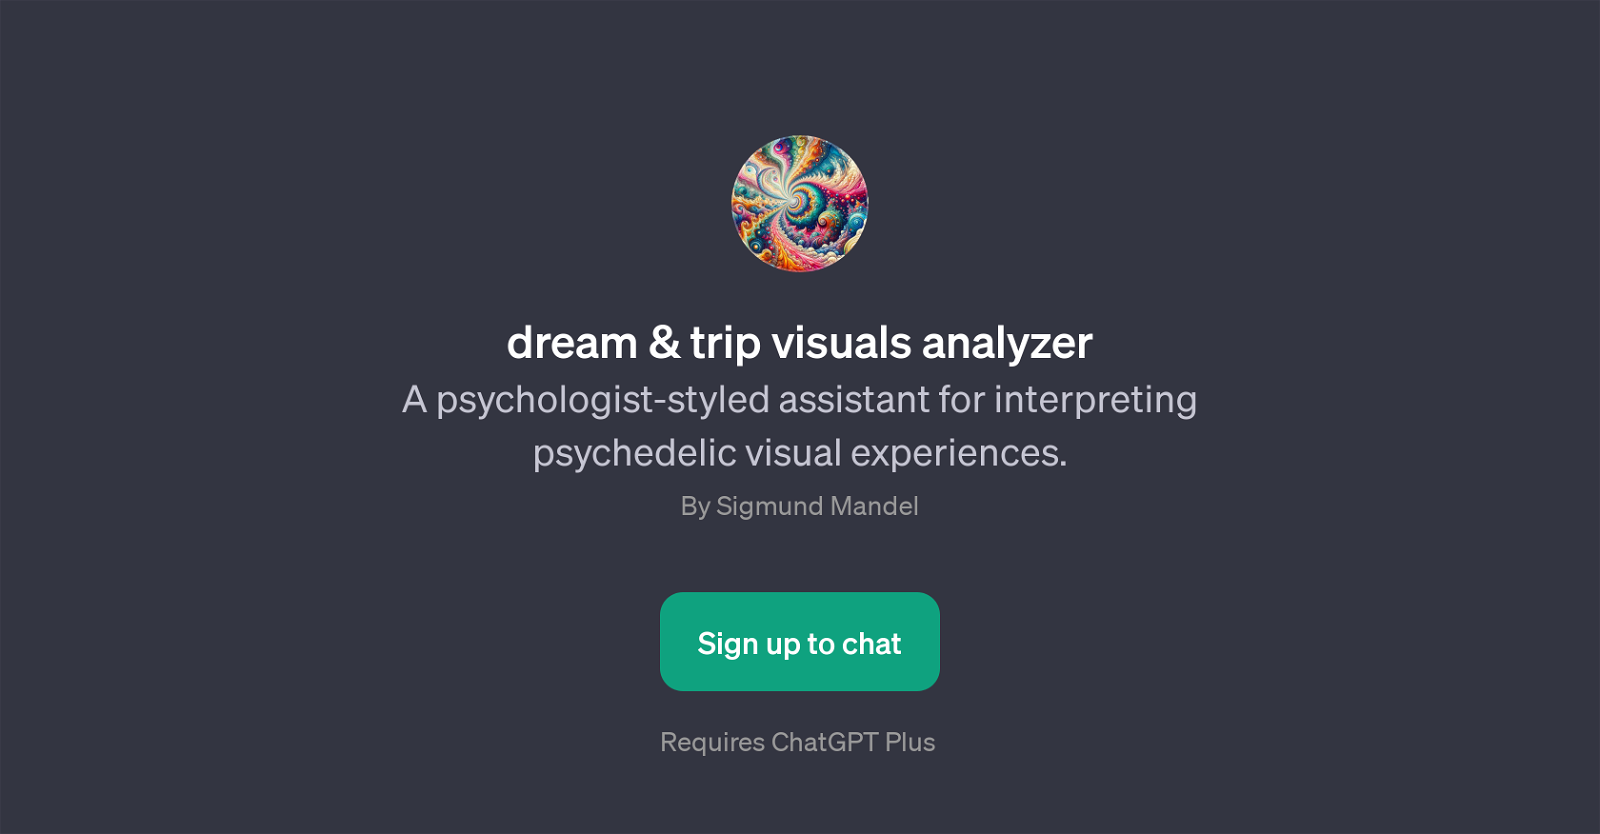 dream & trip visuals analyzer website